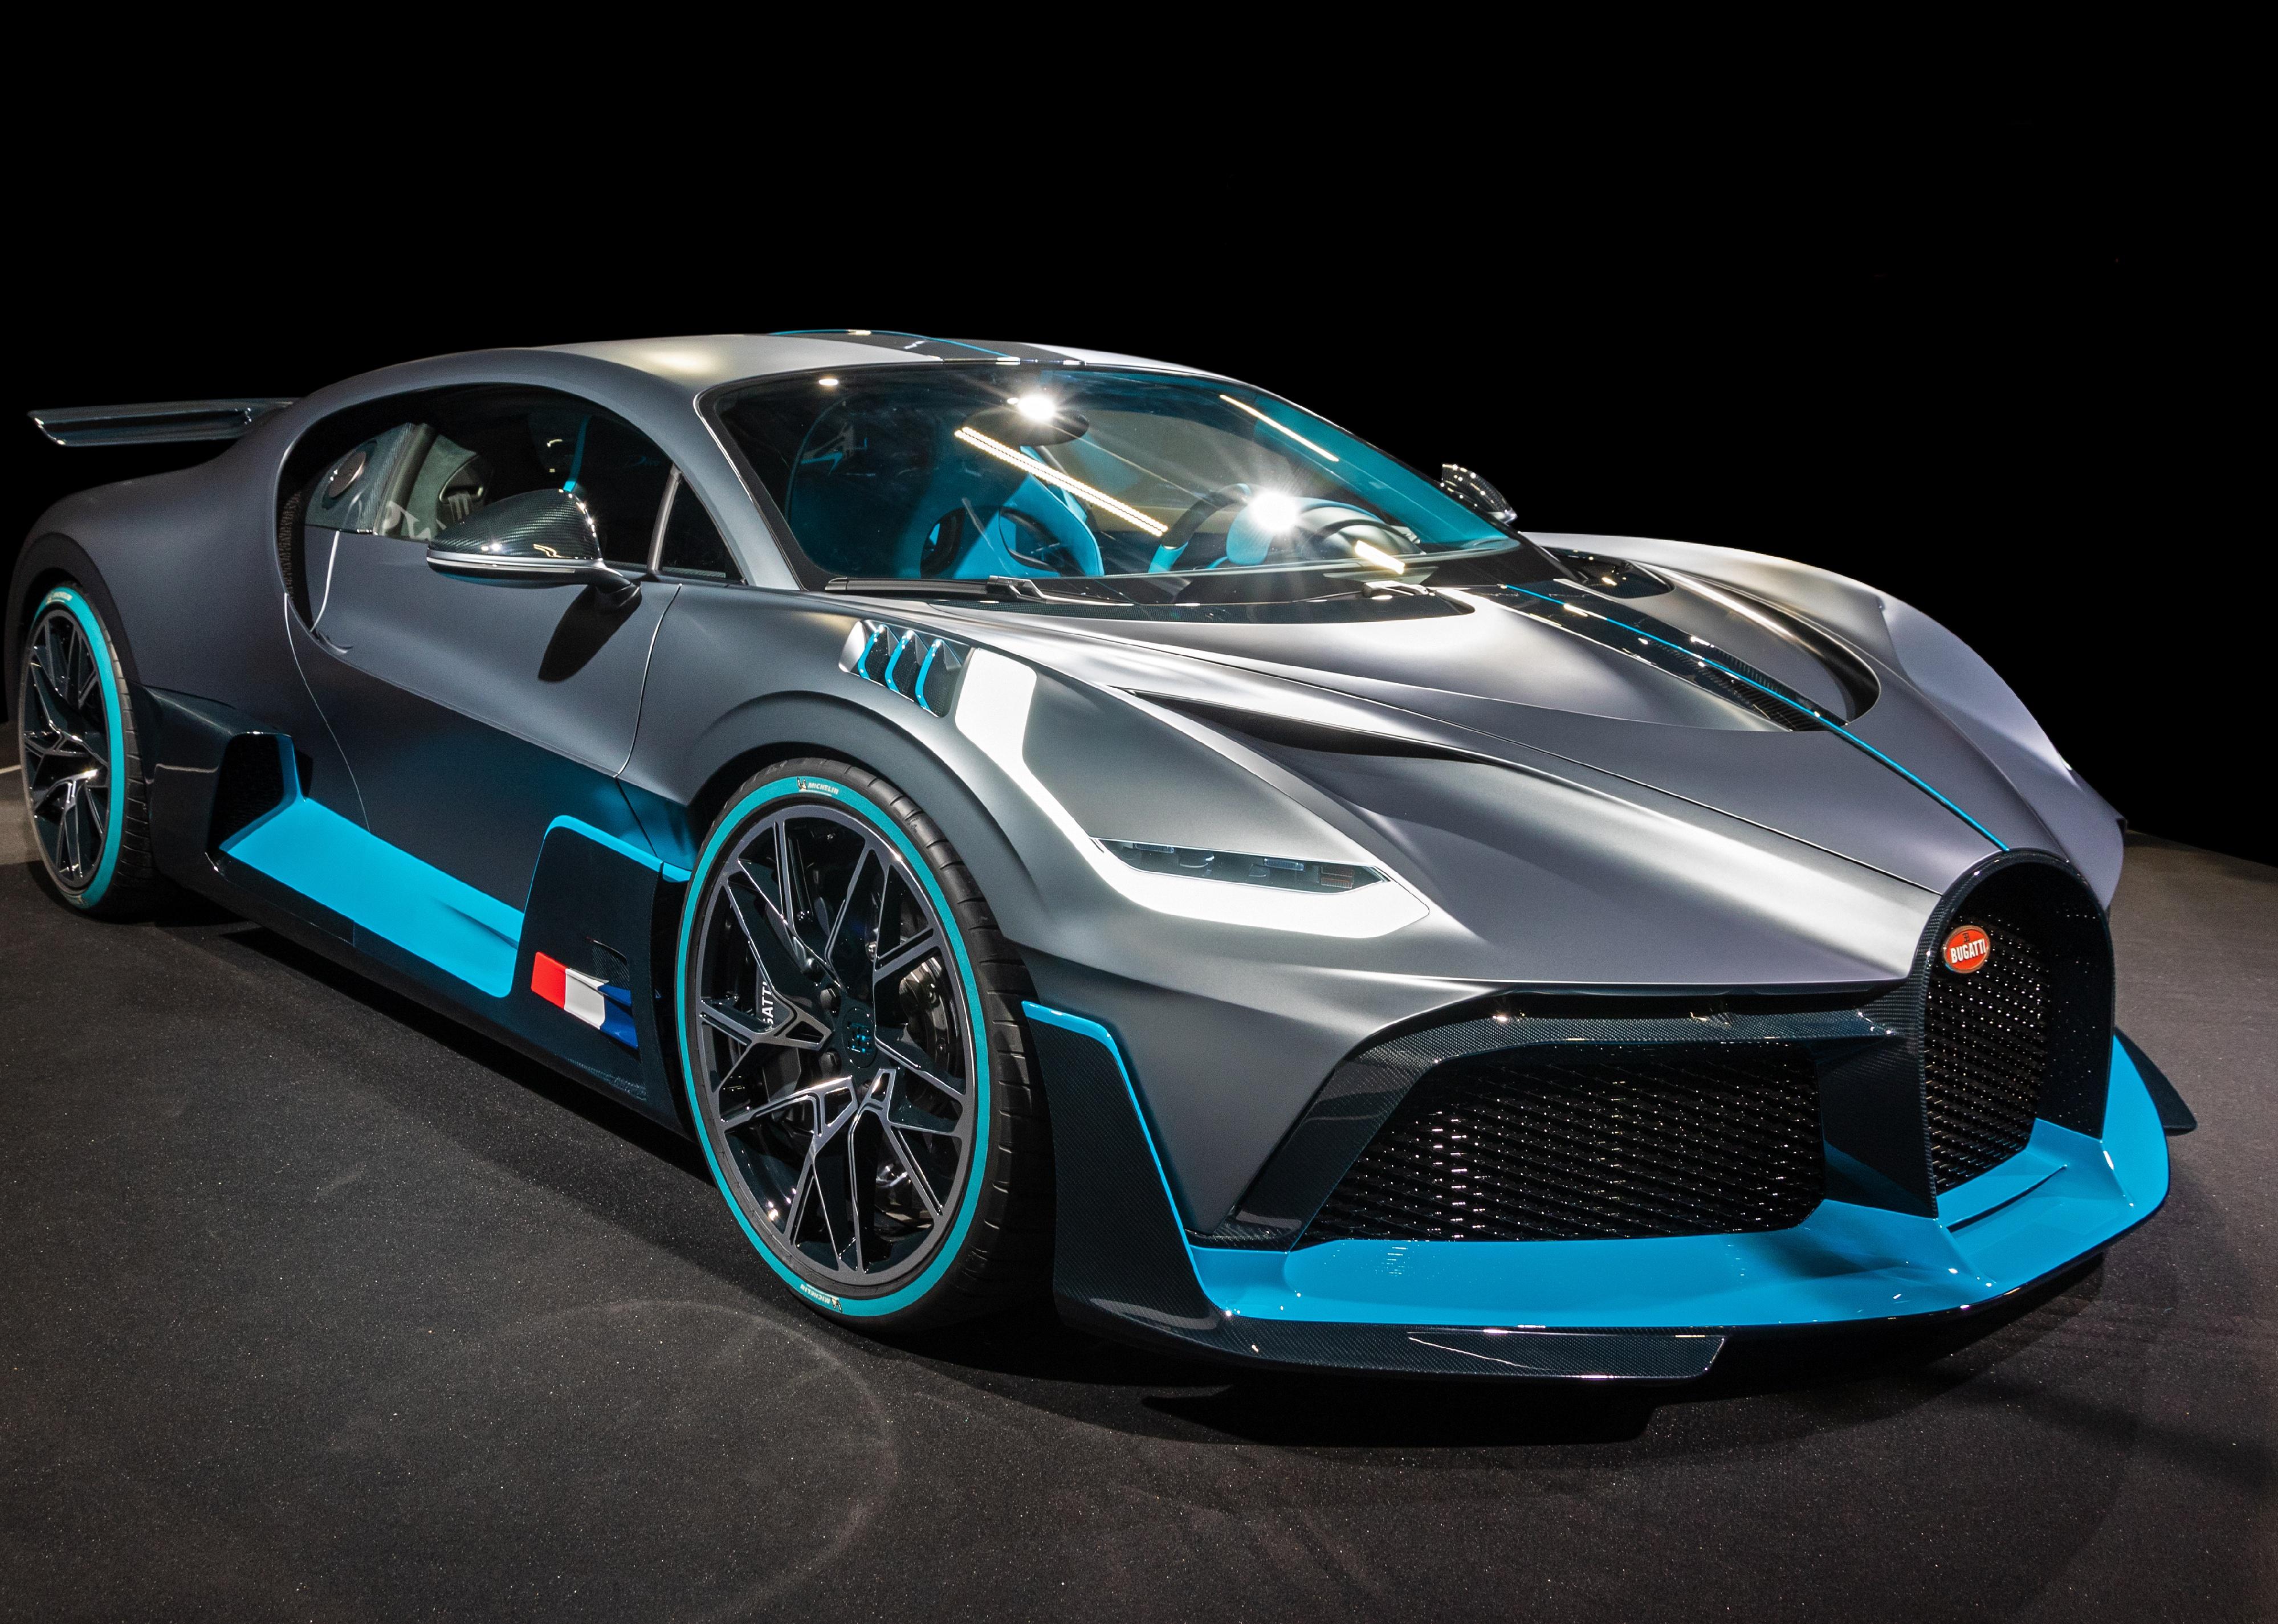 New 2020 Bugatti Divo extreme hypercar showcased at the Paris Motor Show.